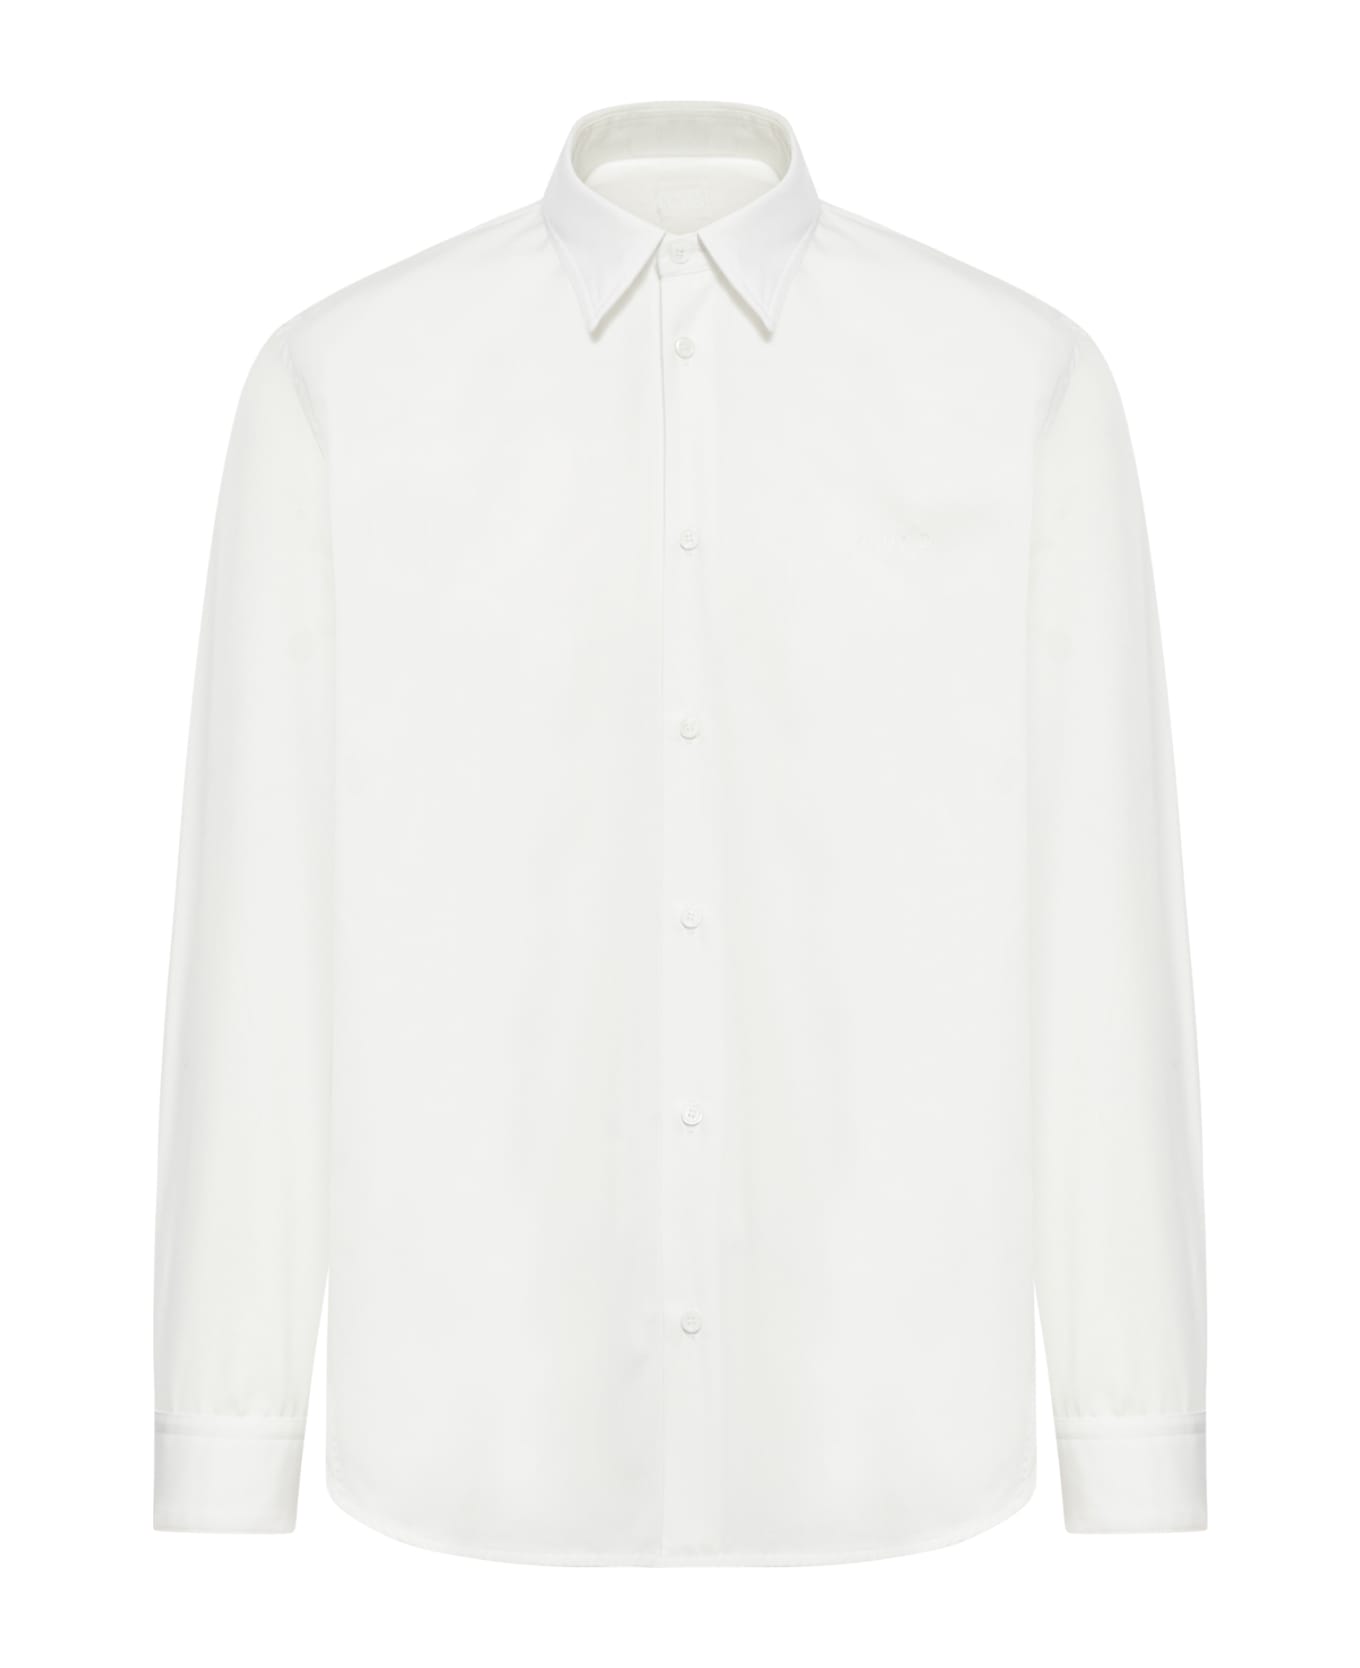 OAMC Mark Shirt, Scribble Patch - White